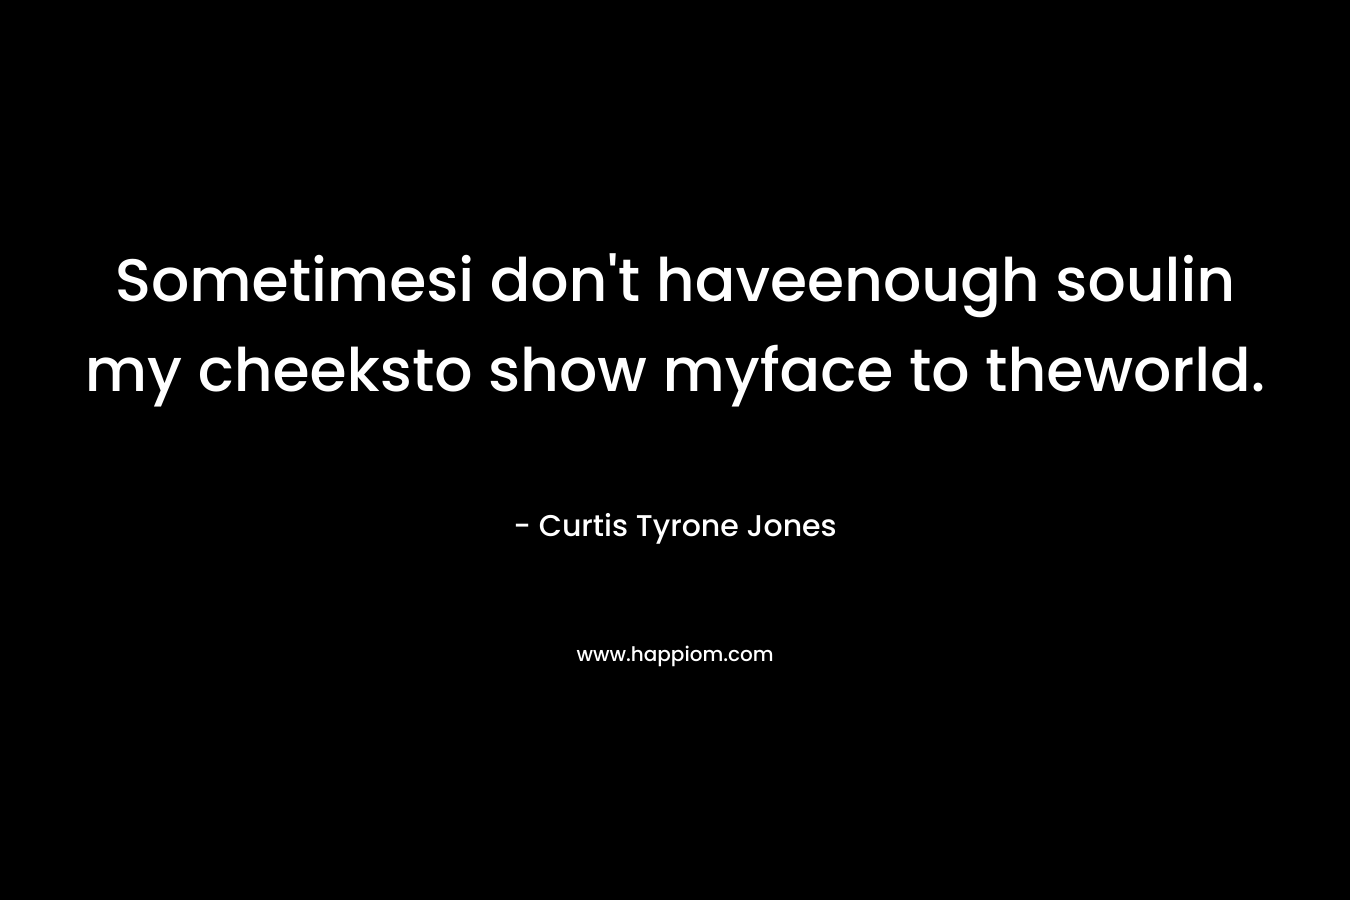 Sometimesi don’t haveenough soulin my cheeksto show myface to theworld. – Curtis Tyrone Jones